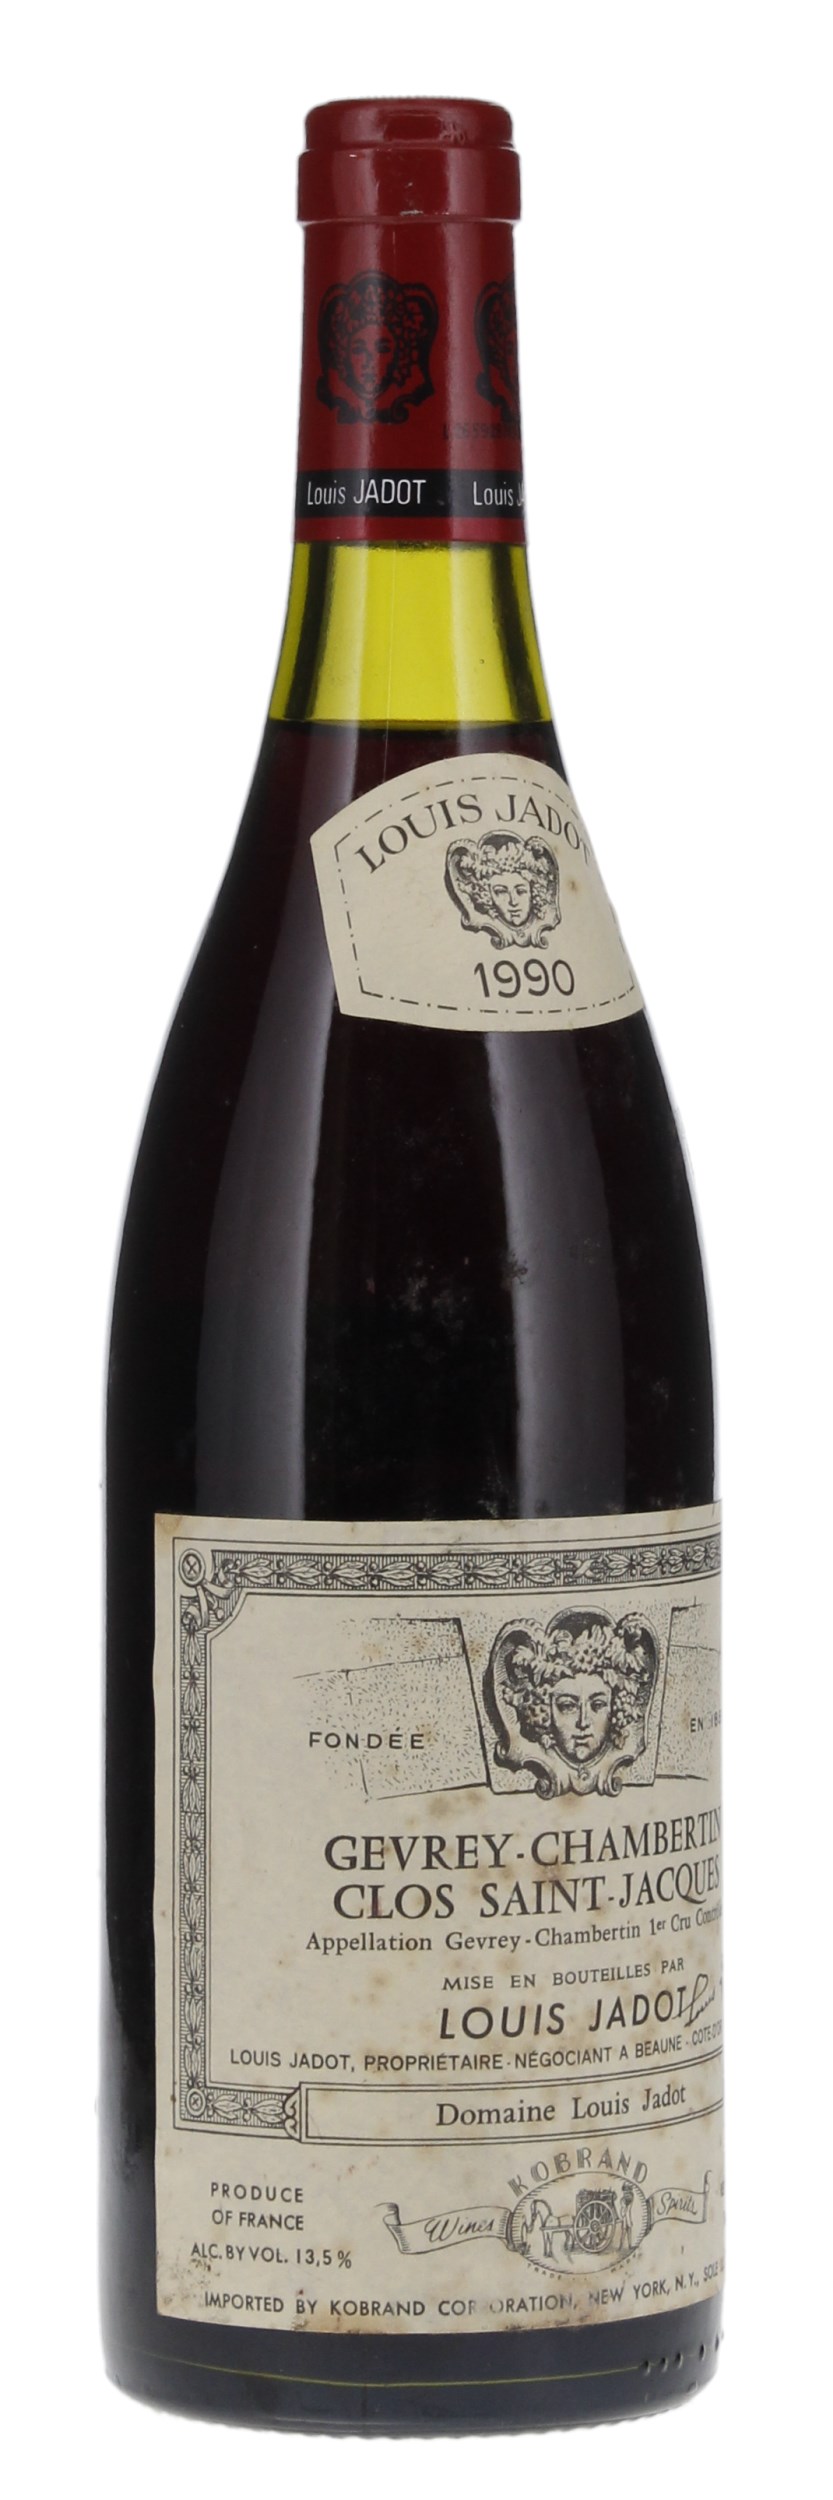 1990 Louis Jadot Gevrey-Chambertin Clos St. Jacques, 750ml